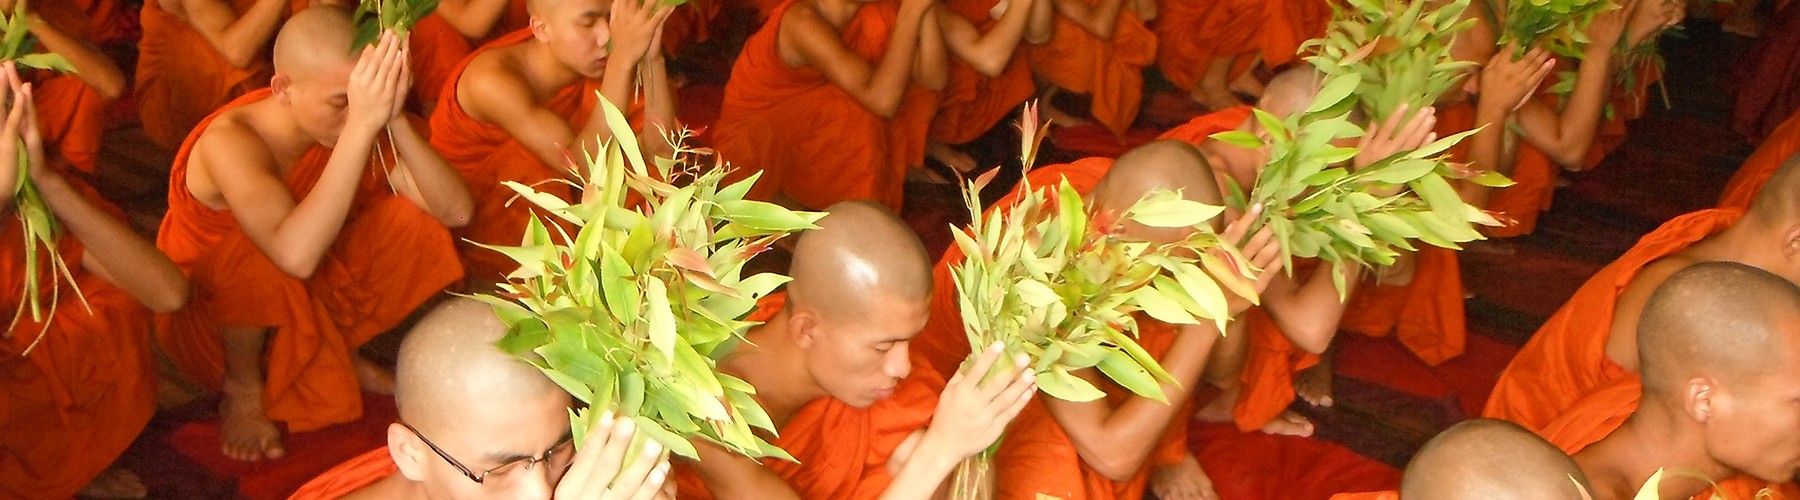 450 Monks and Novices Undertaking Precepts for Vassa Rainy Season